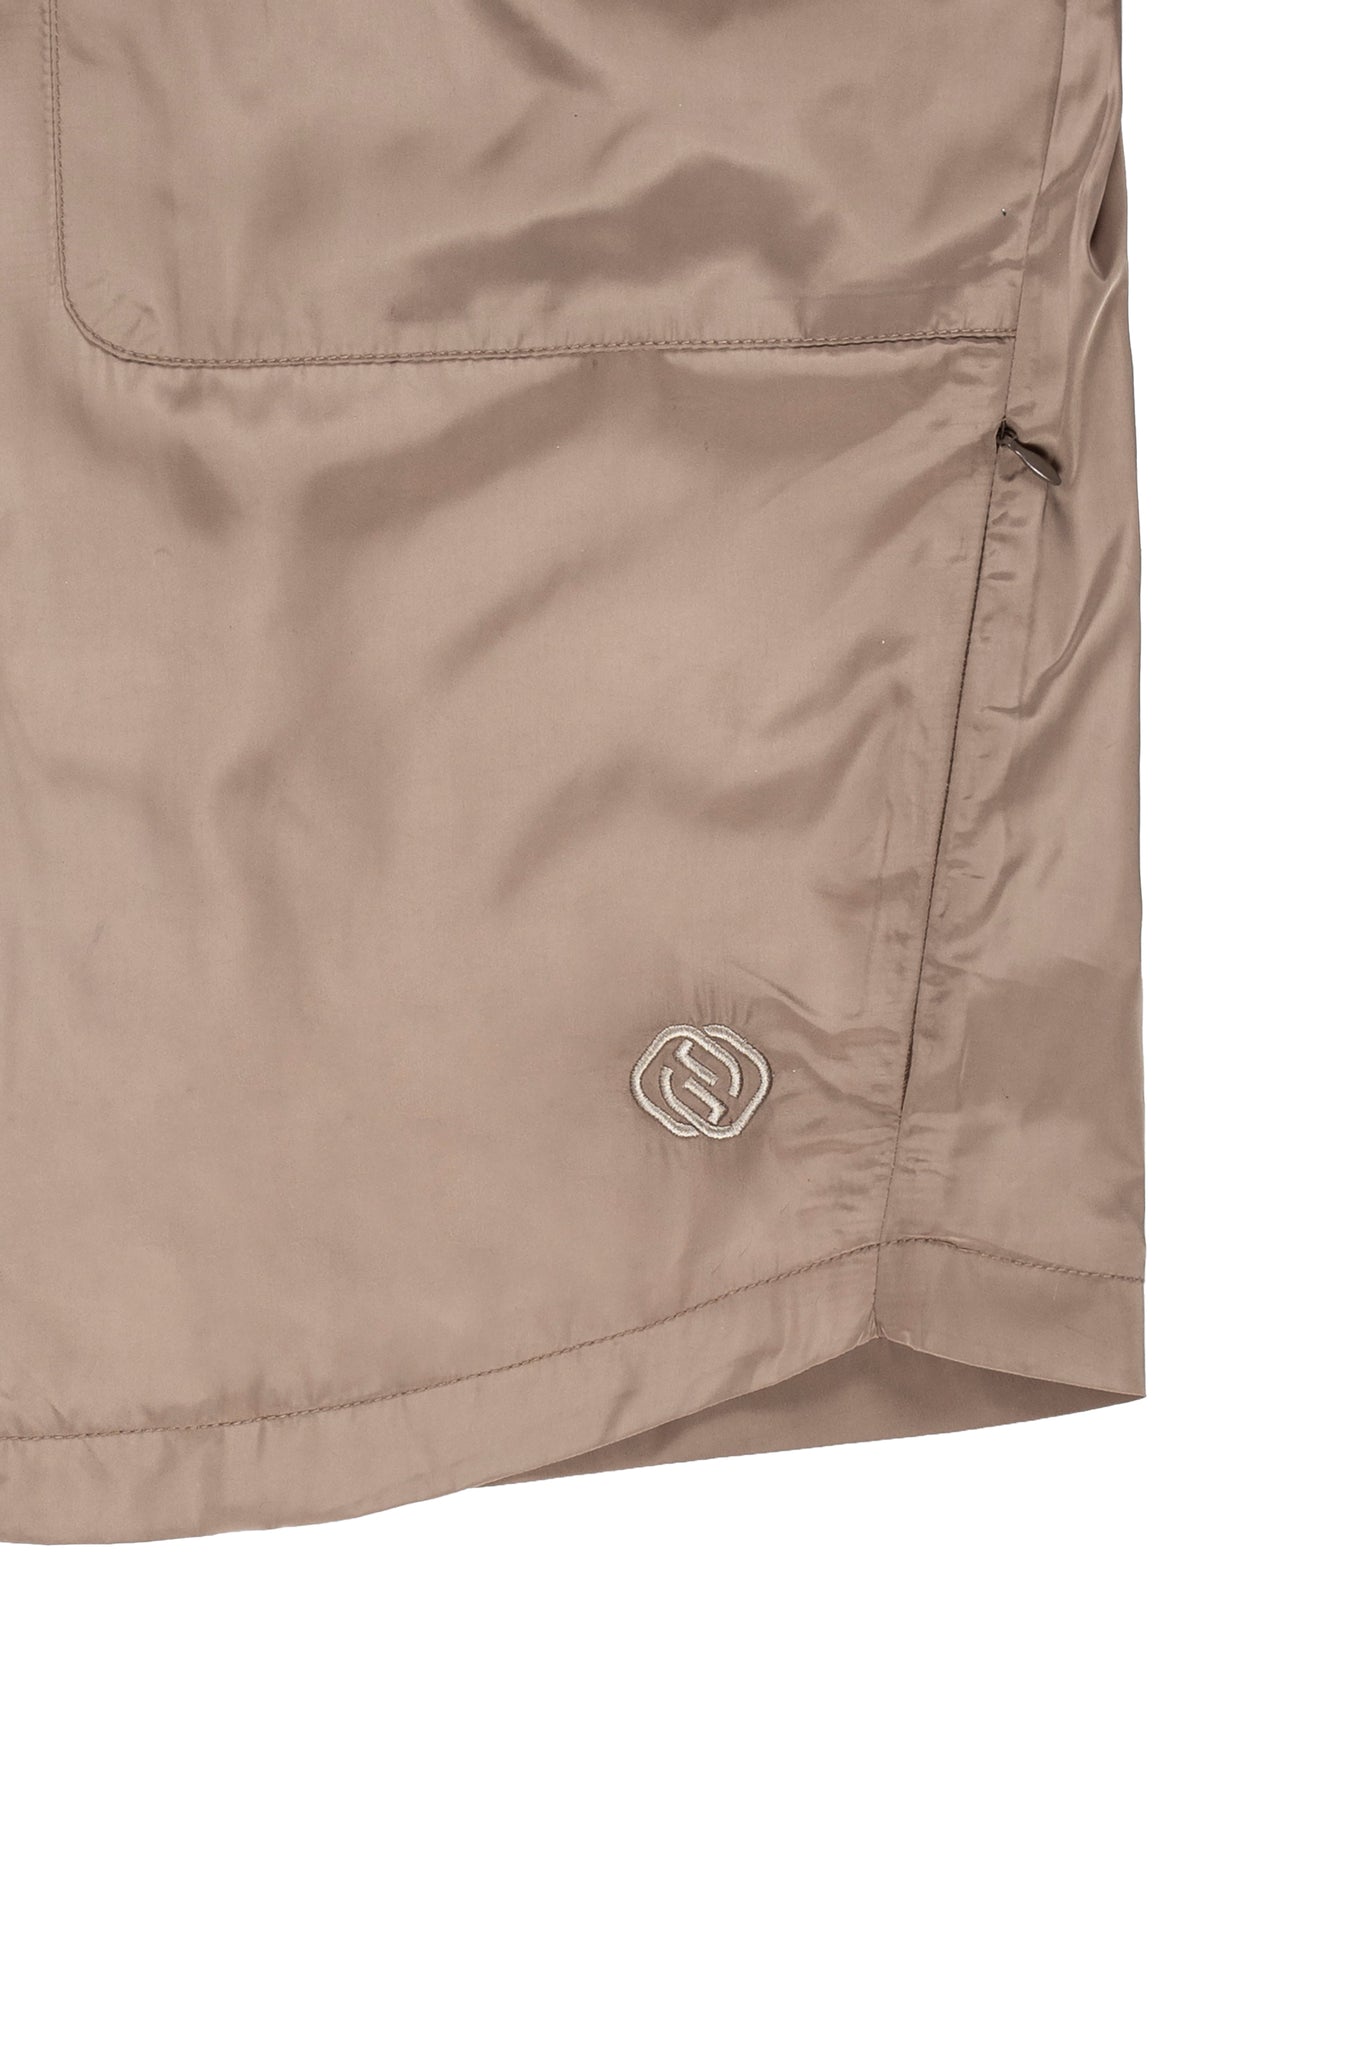 Remini Zip-up Jacket in Brown